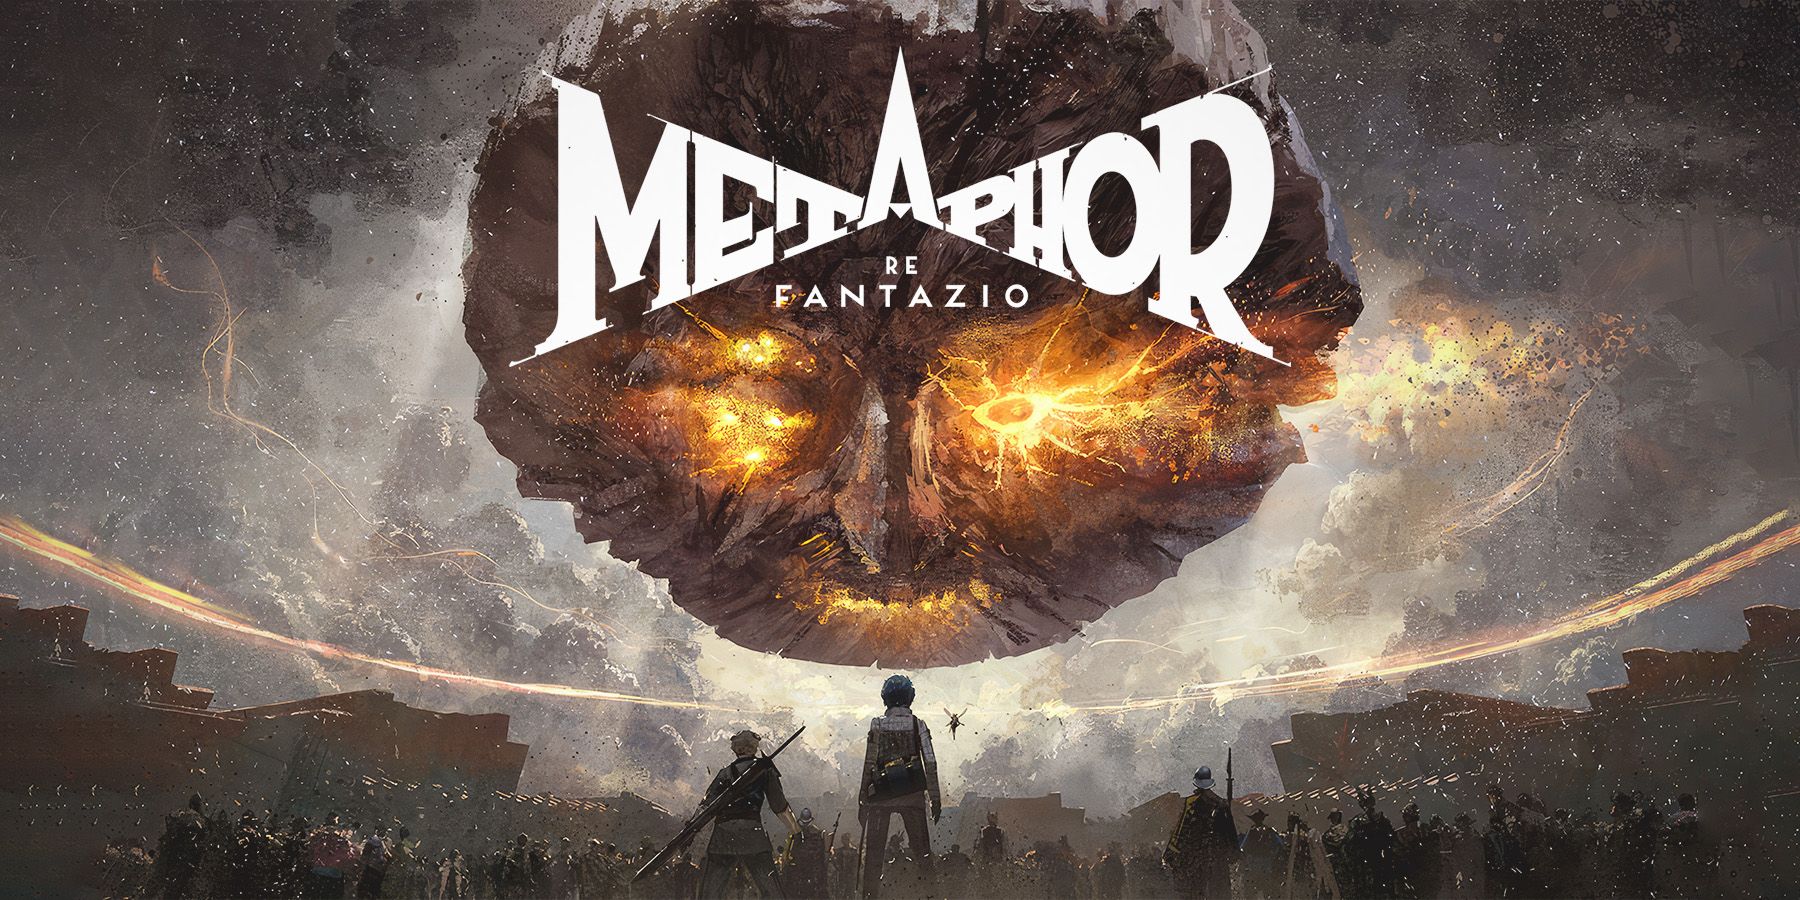 Metaphor ReFantazio evil-looking floating stone head smiling artwork with game logo